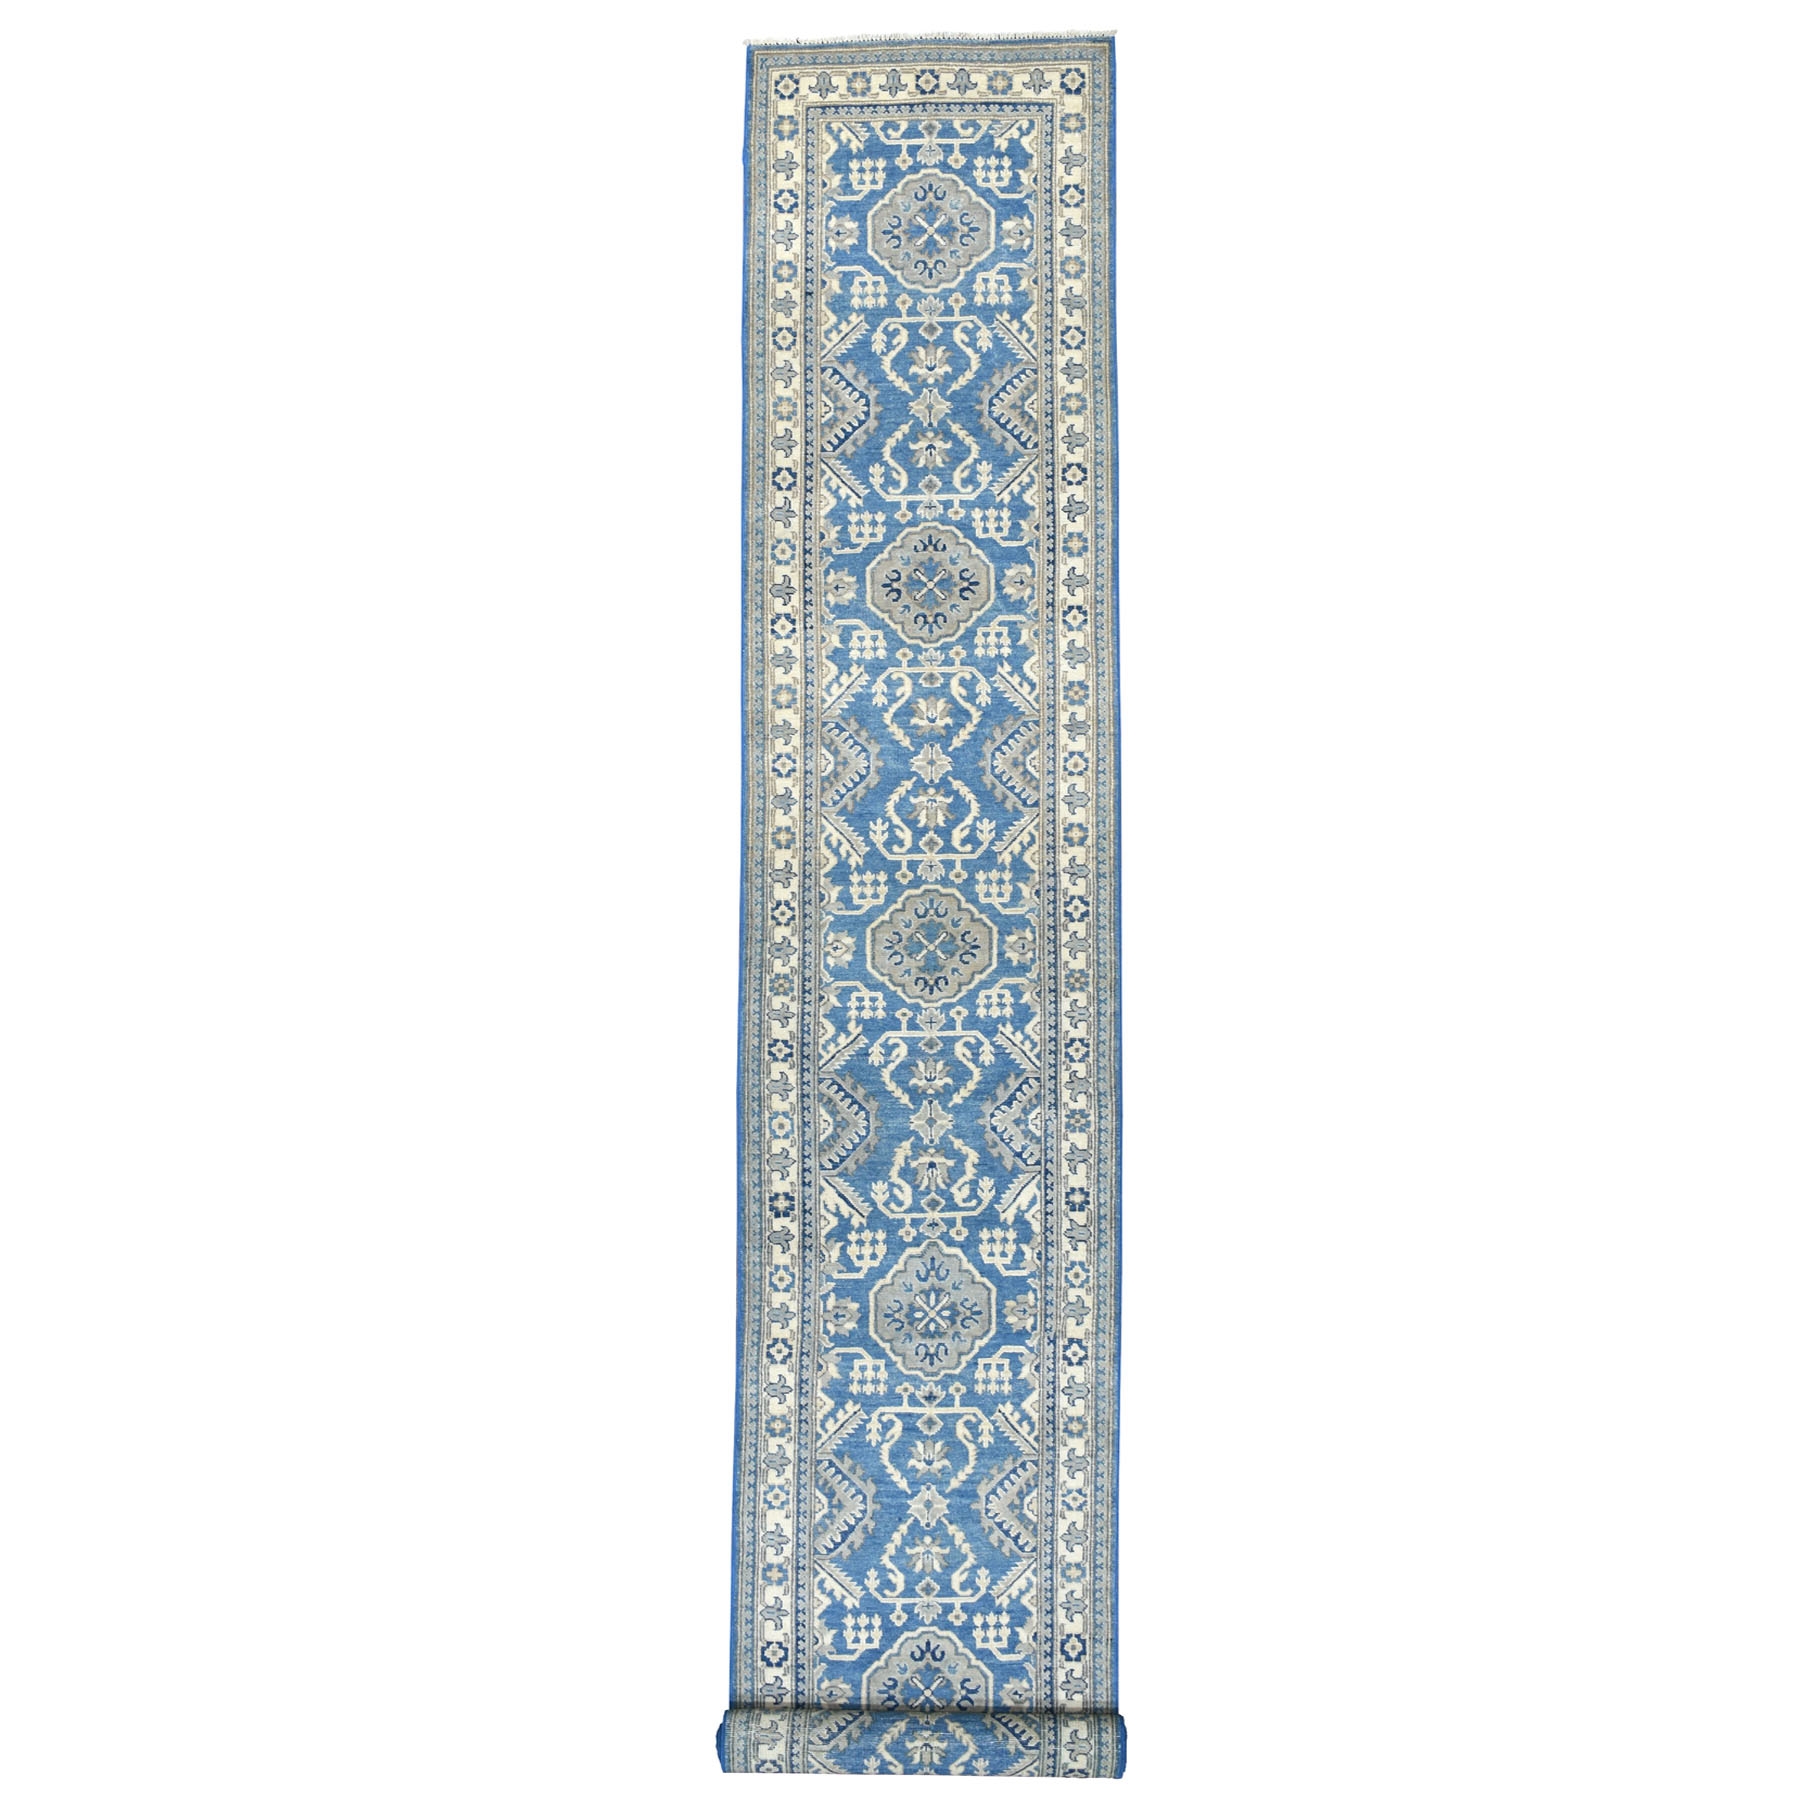 2'7"X18'5" Vintage Look Kazak Geometric Design Blue Xl Runner Pure Wool Hand Knotted Oriental Rug moaebe09